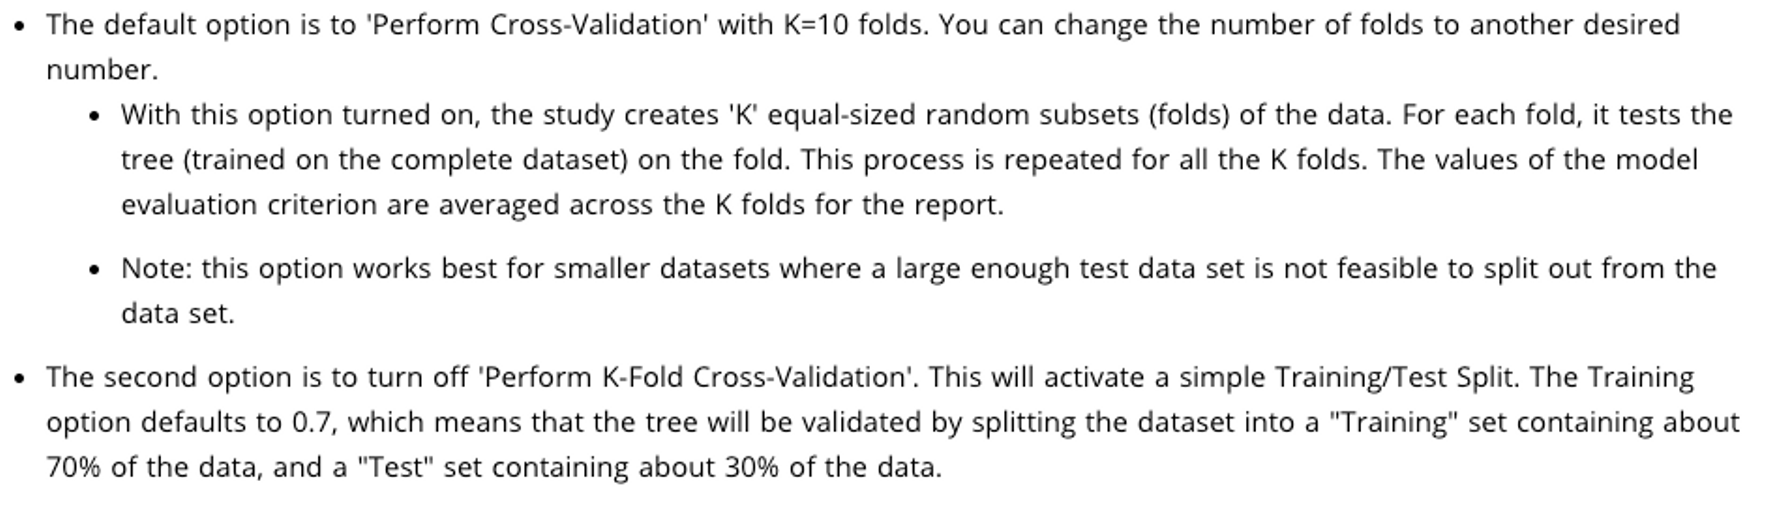 Indented list explaining cross-validation with K=10 folds.